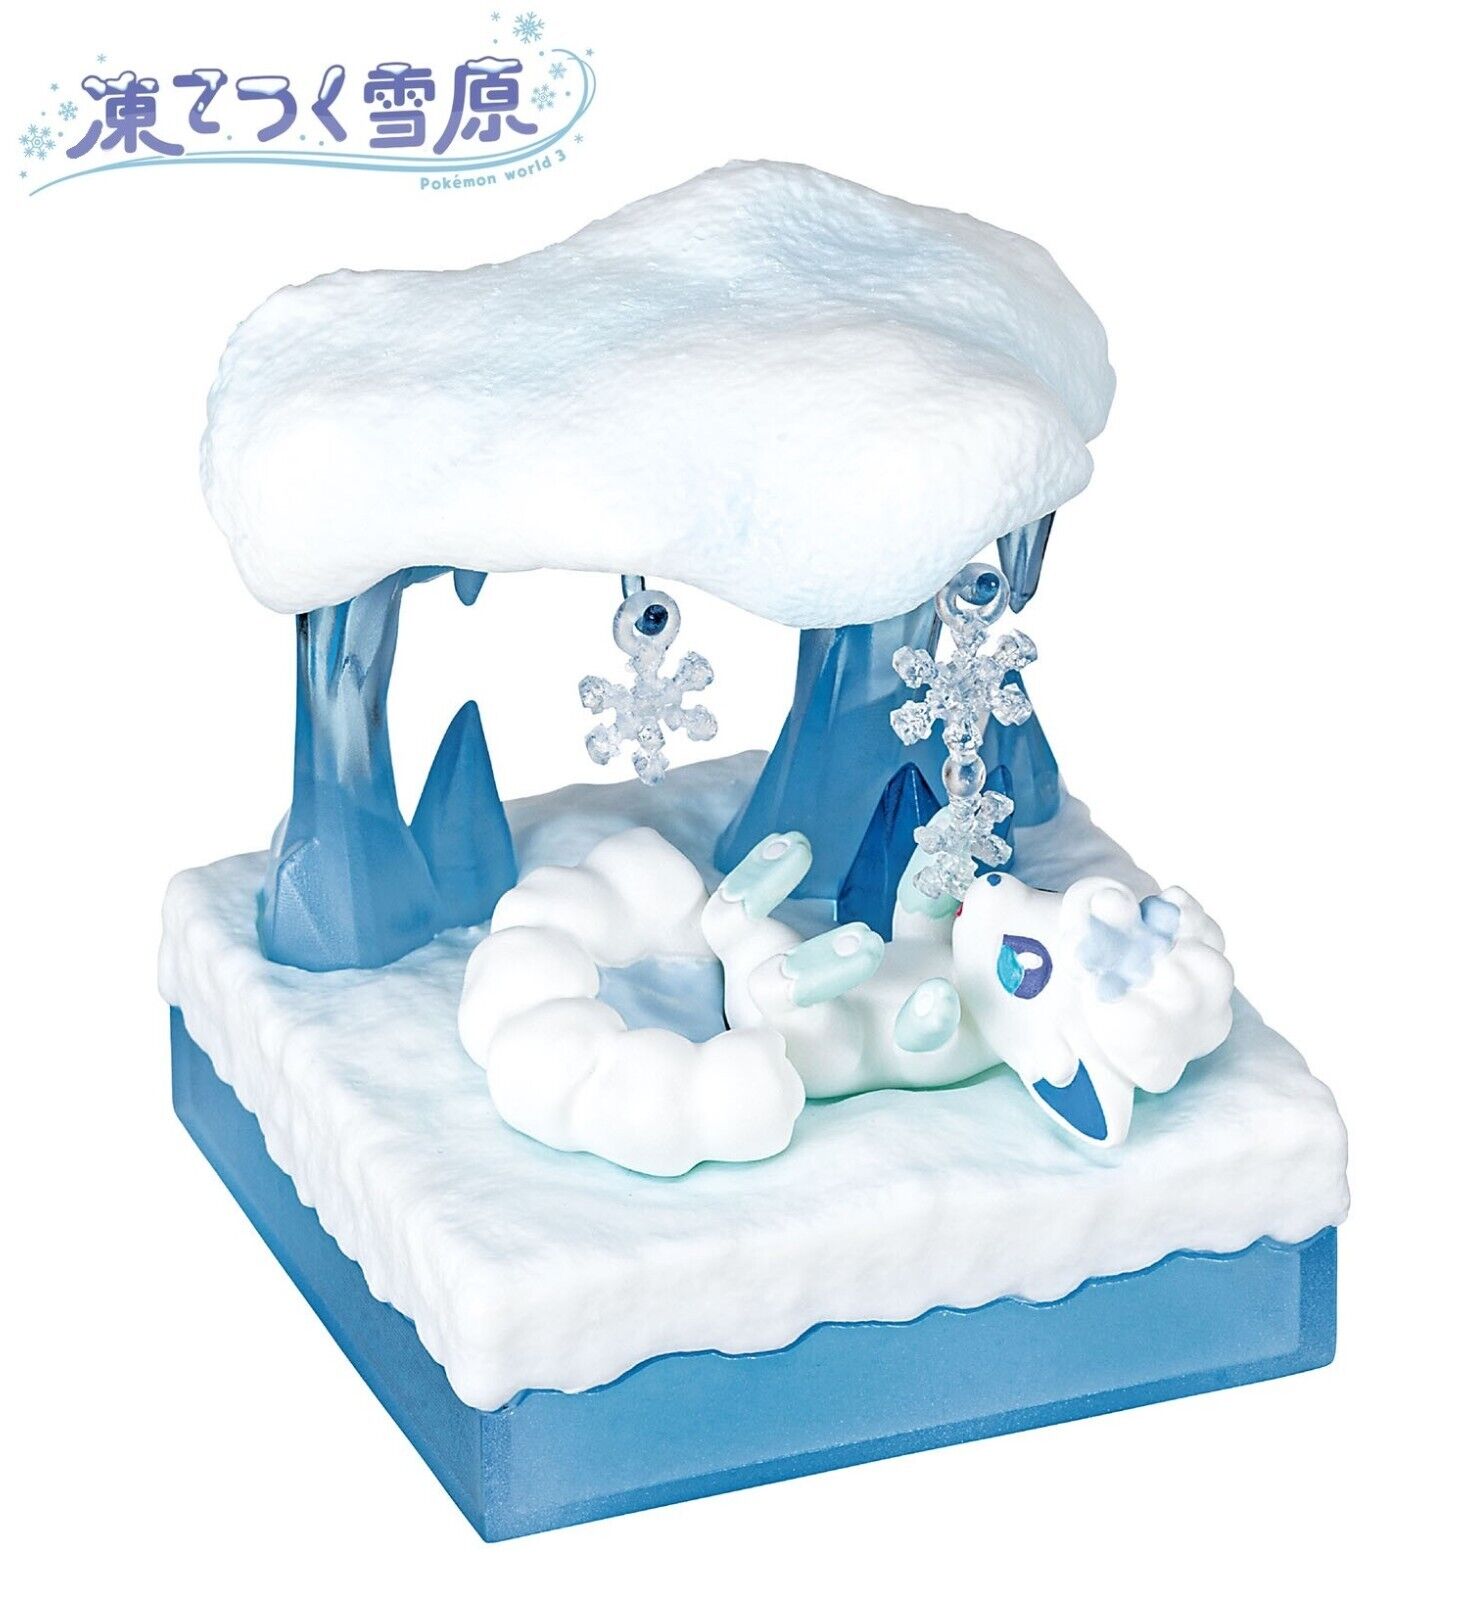 RE-MENT Atsumete Pokemon World 3 Frozen Snowfield Mini Figure #5 Alolan Vulpix